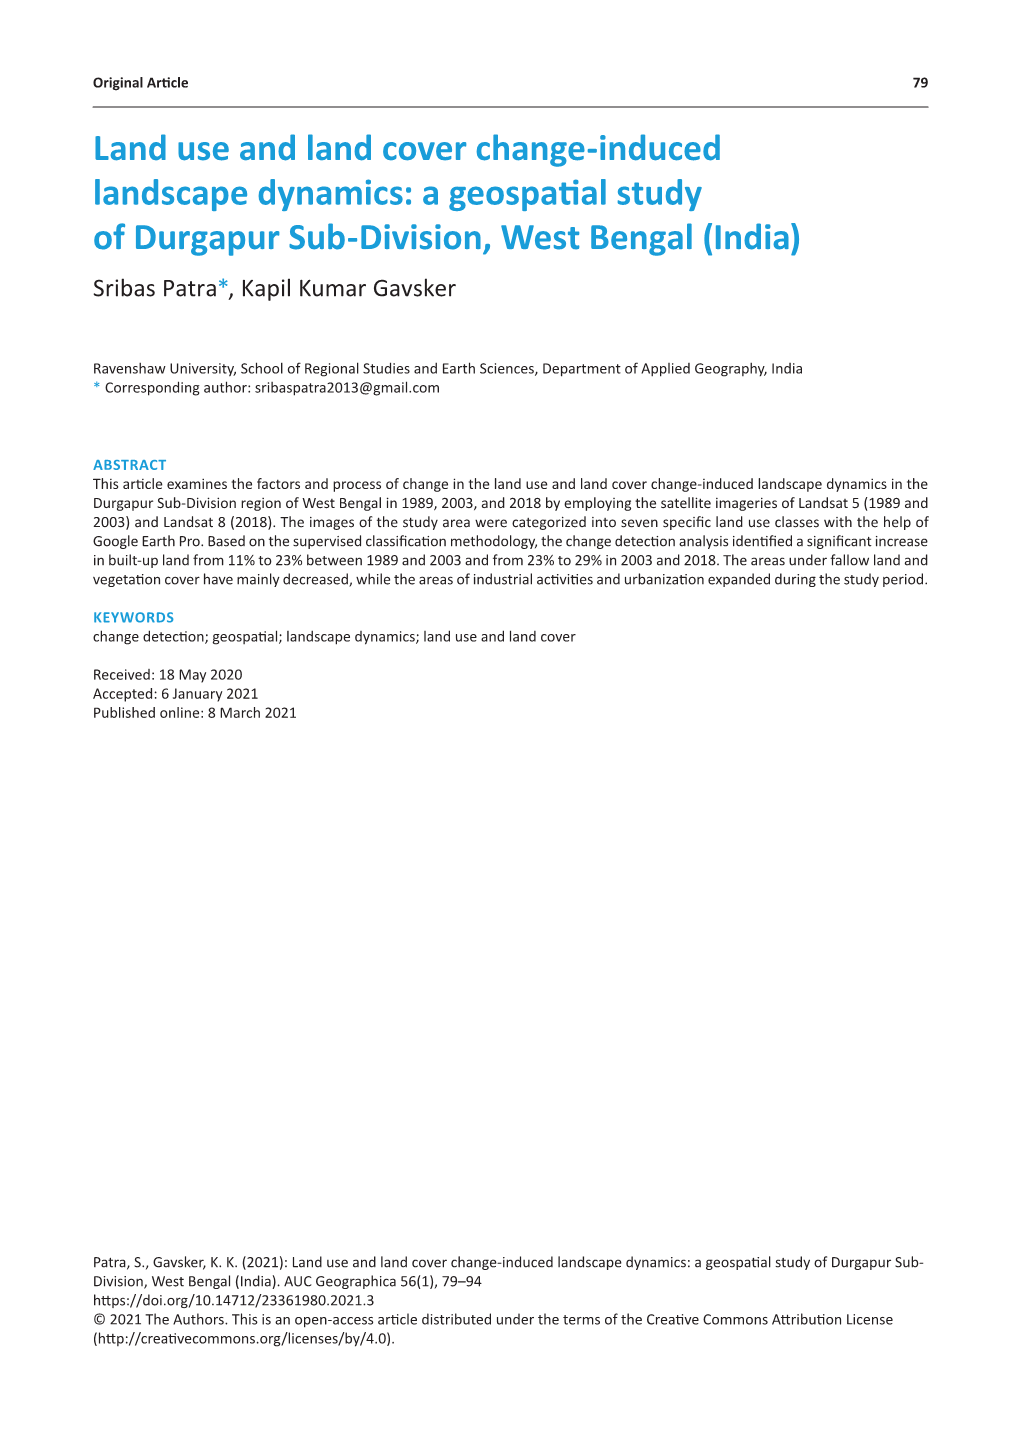 Land Use and Land Cover Change-Induced Landscape Dynamics: a Geospatial Study of Durgapur Sub-Division, West Bengal (India) Sribas Patra*, Kapil Kumar Gavsker